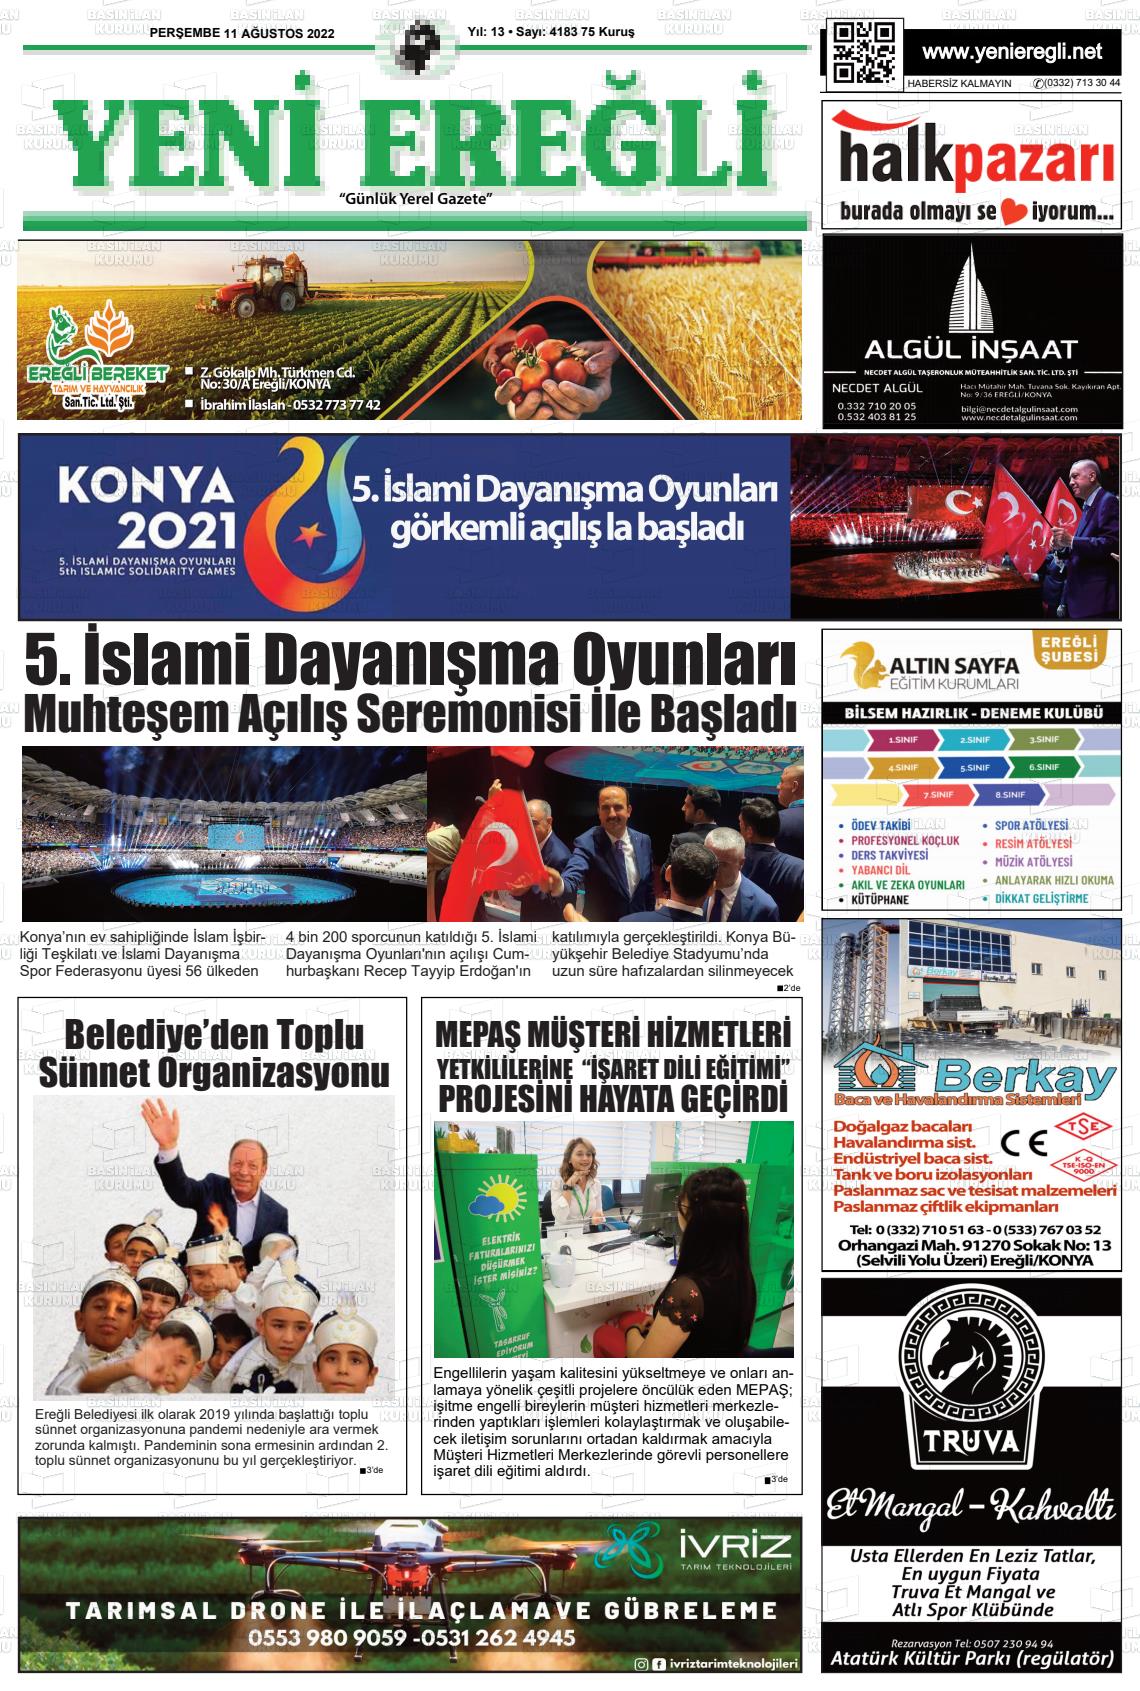 11 Ağustos 2022 Yeni Ereğli Gazete Manşeti